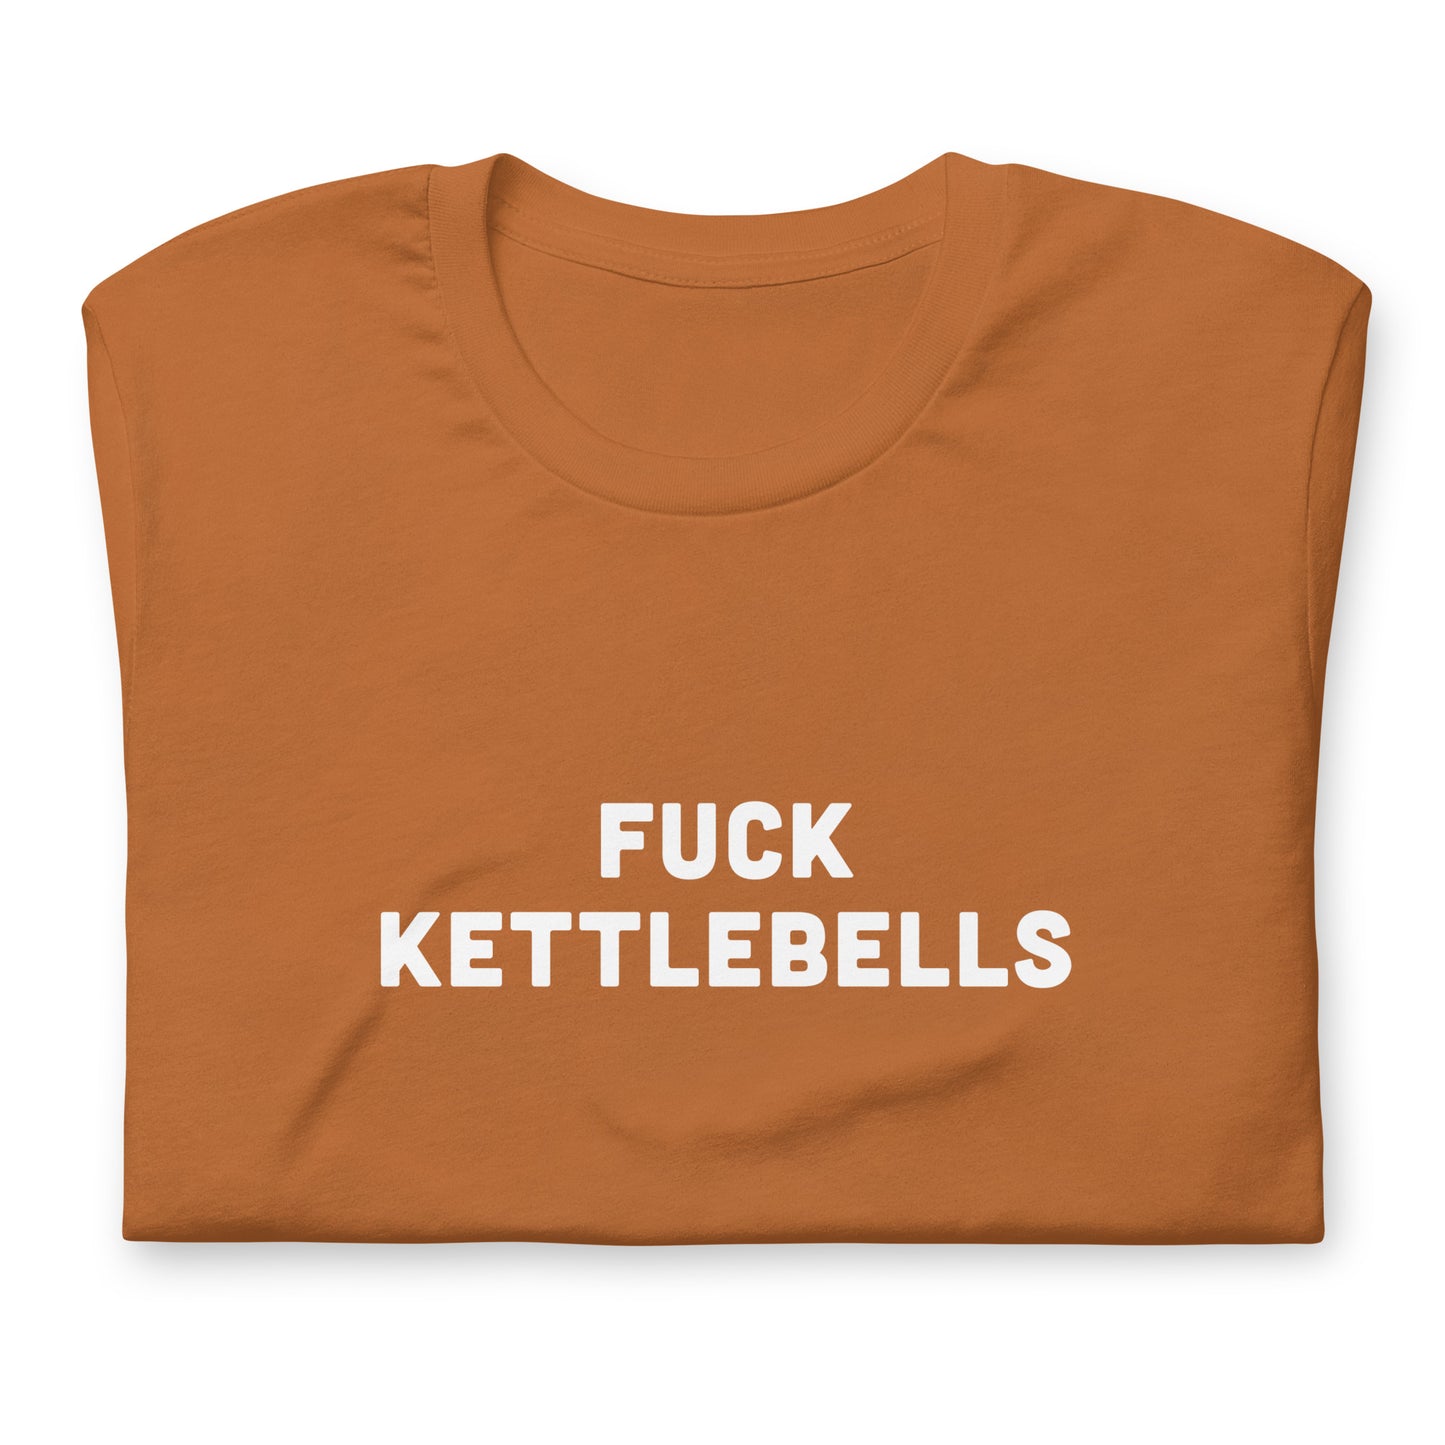 Fuck Kettlebells T-Shirt Size XL Color Navy